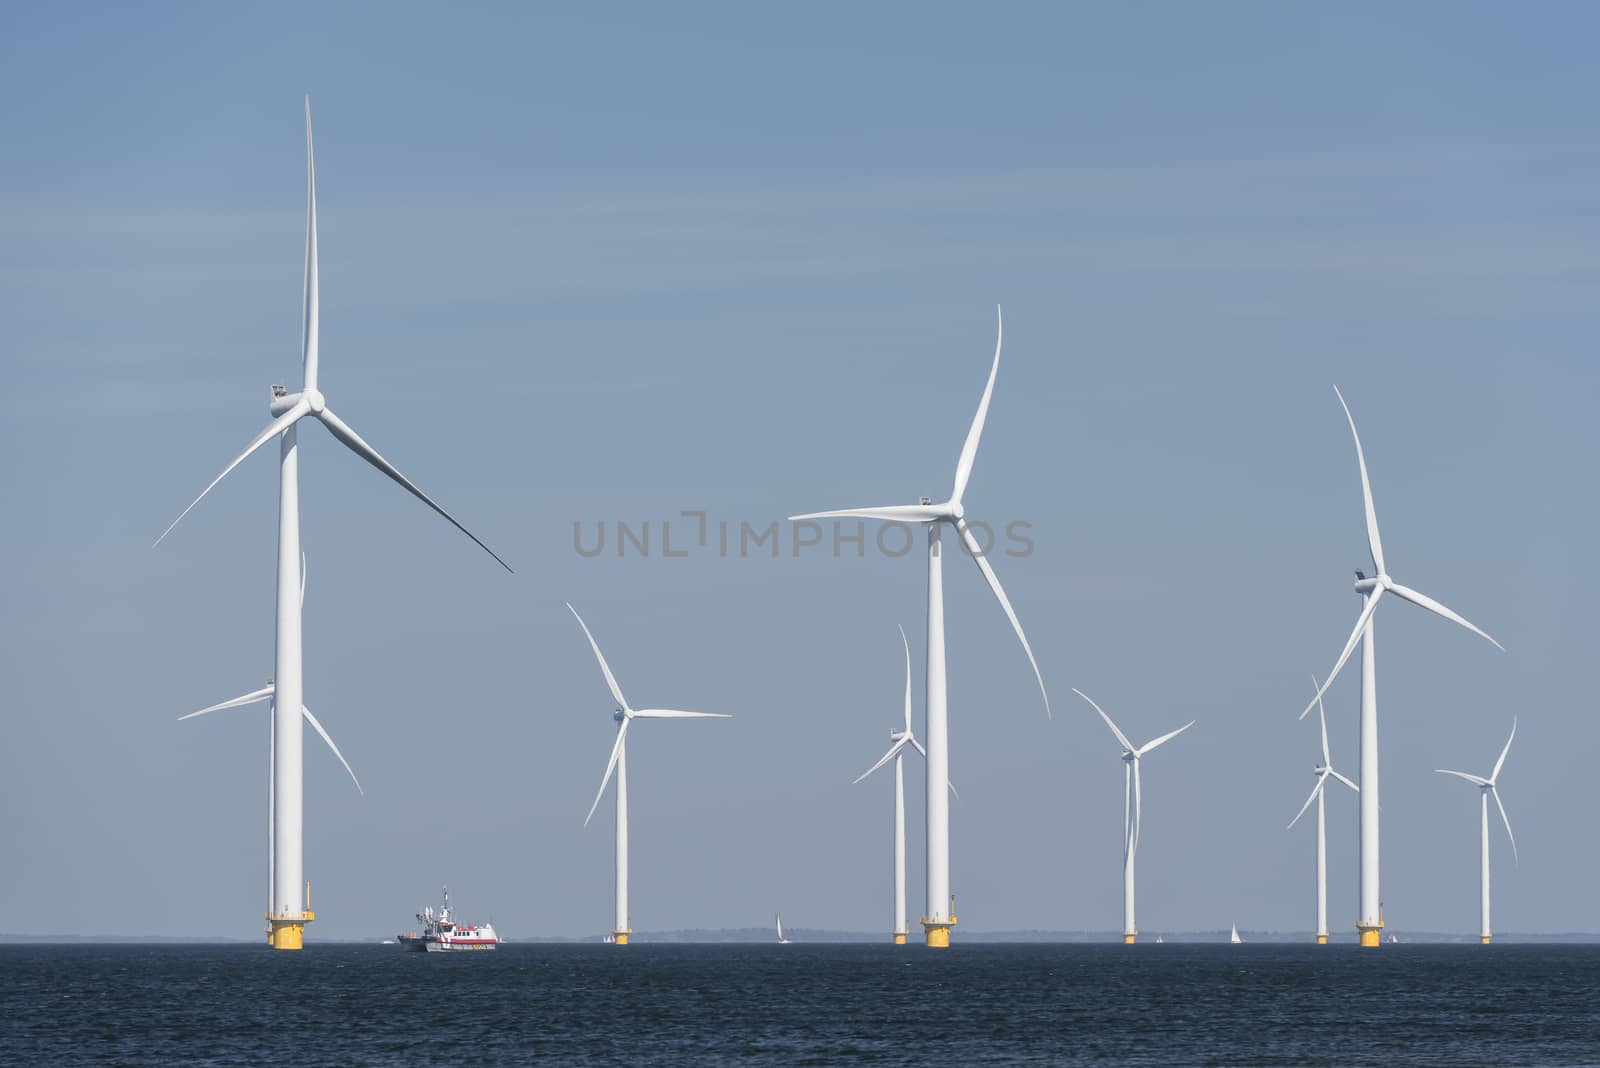 Wind farm in the water off the coast of the noordoostpolder in the Netherlands
